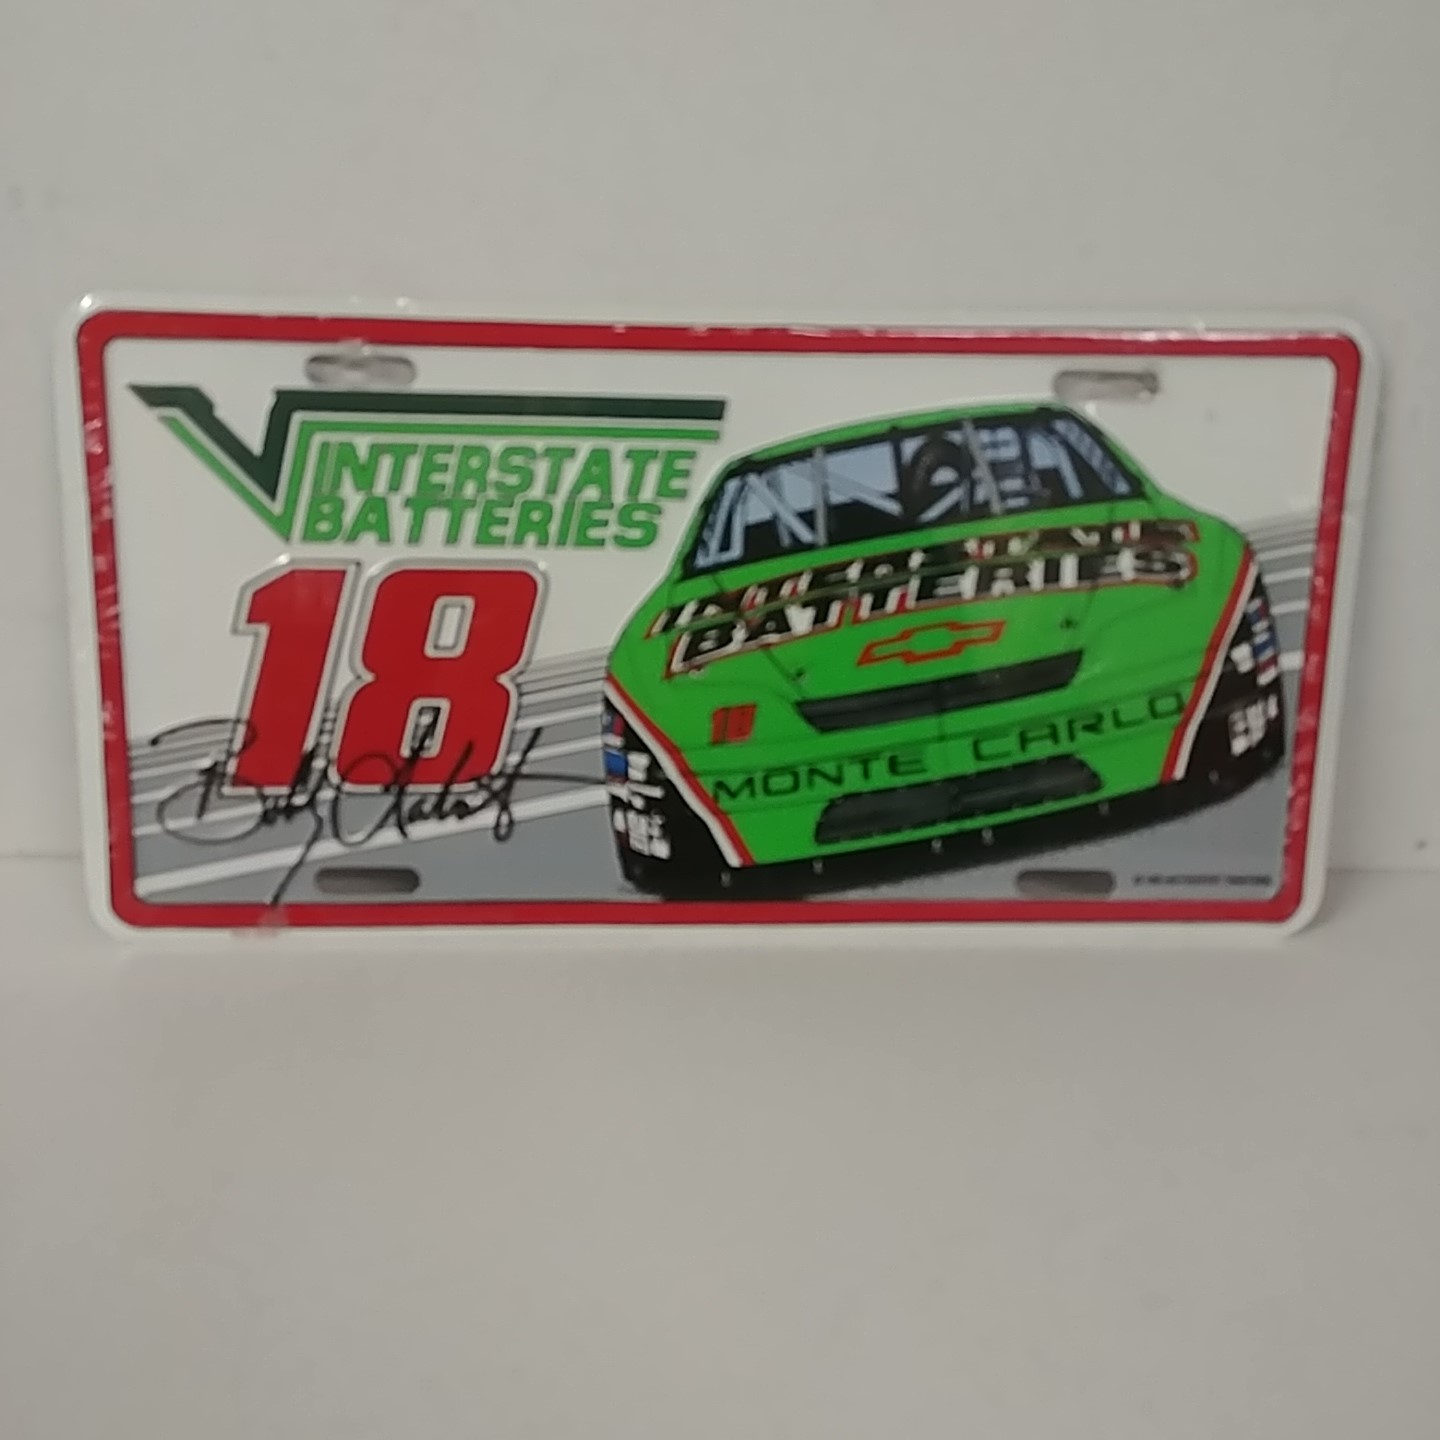 1995 Bobby Labonte Interstate Batteries metal license plate